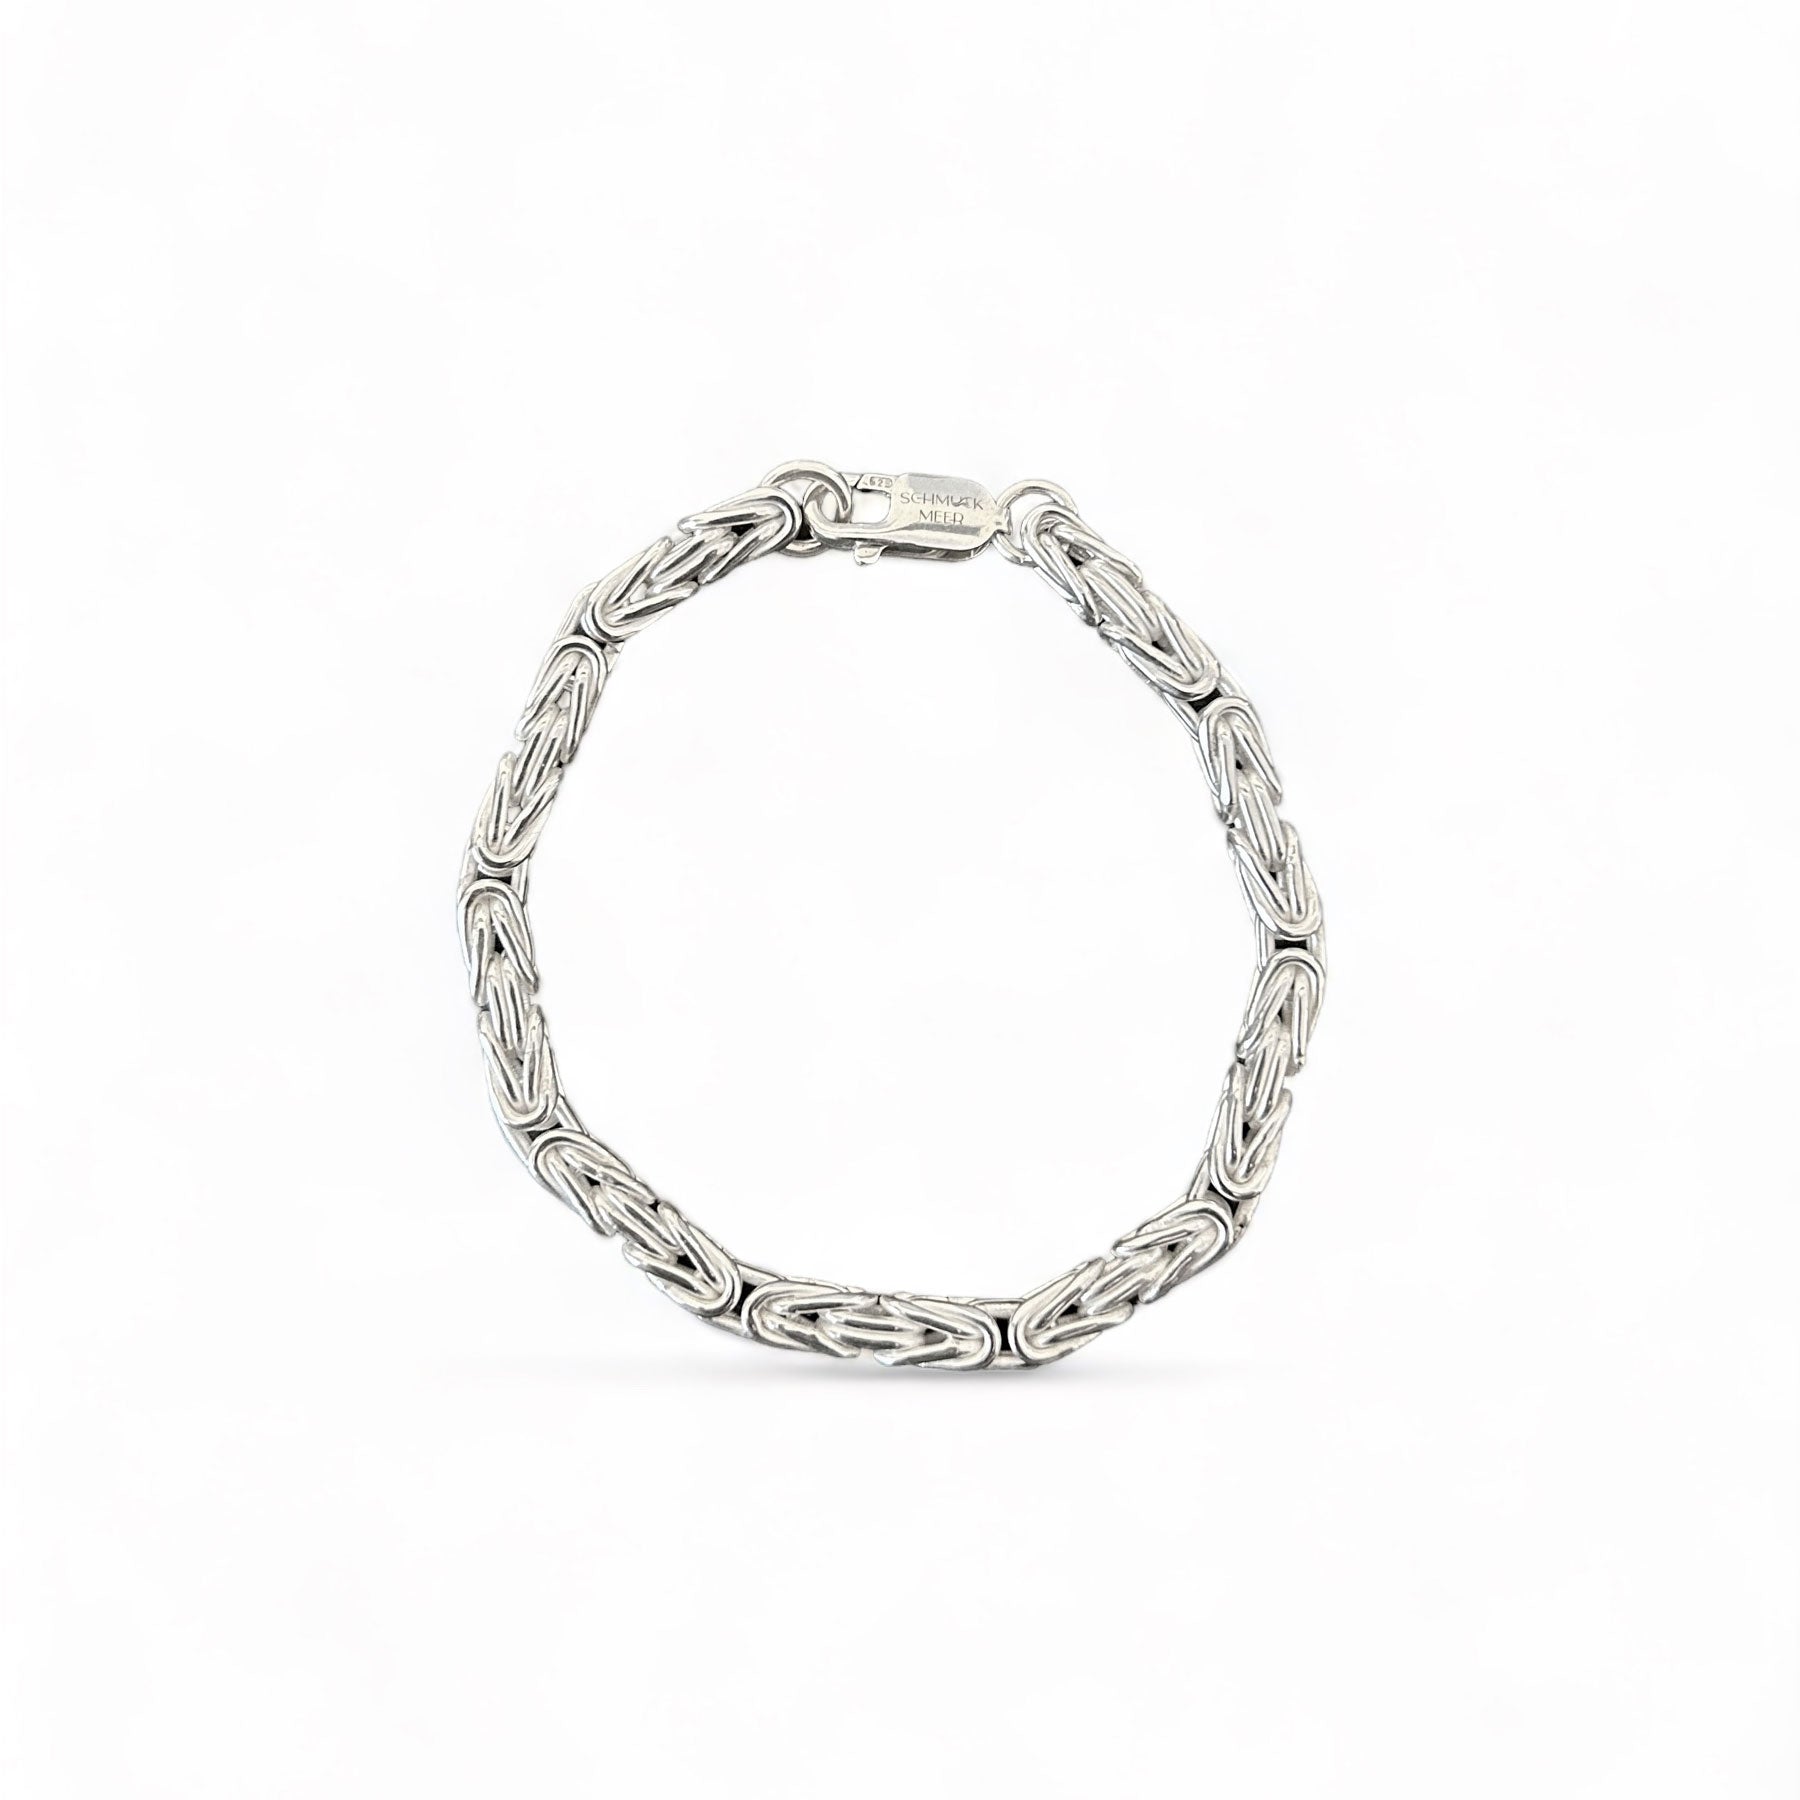 Royal bracelet square 5mm - 925 silver